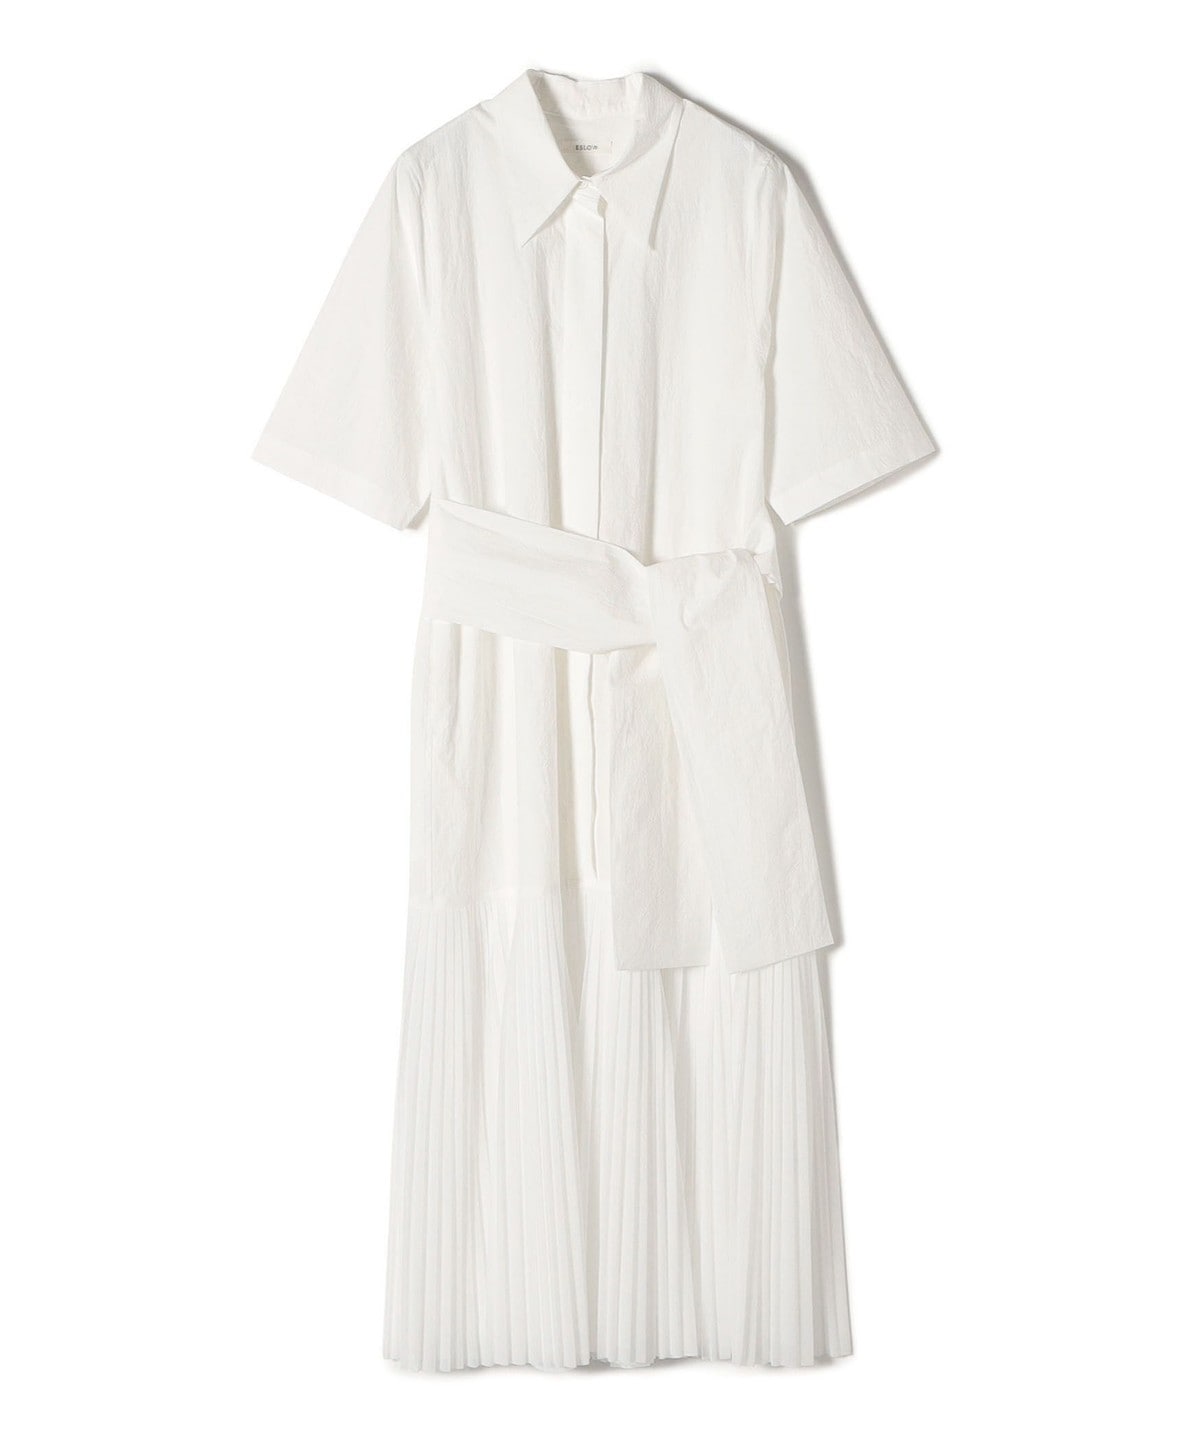 ESLOW:シャツドレス ホワイト